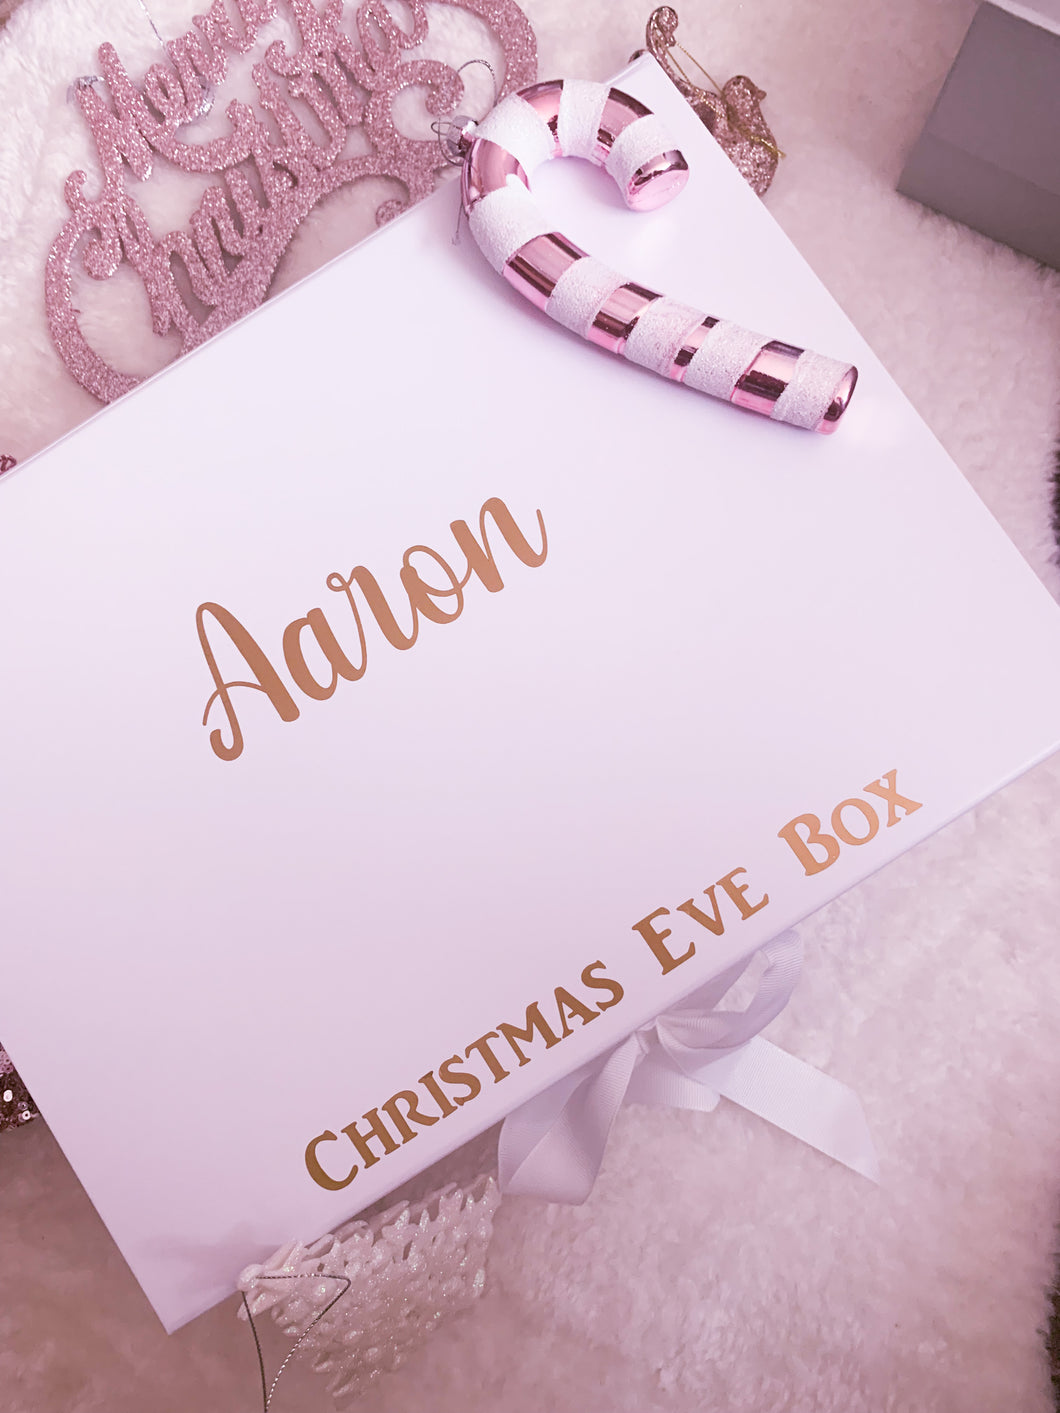 White Christmas Eve box